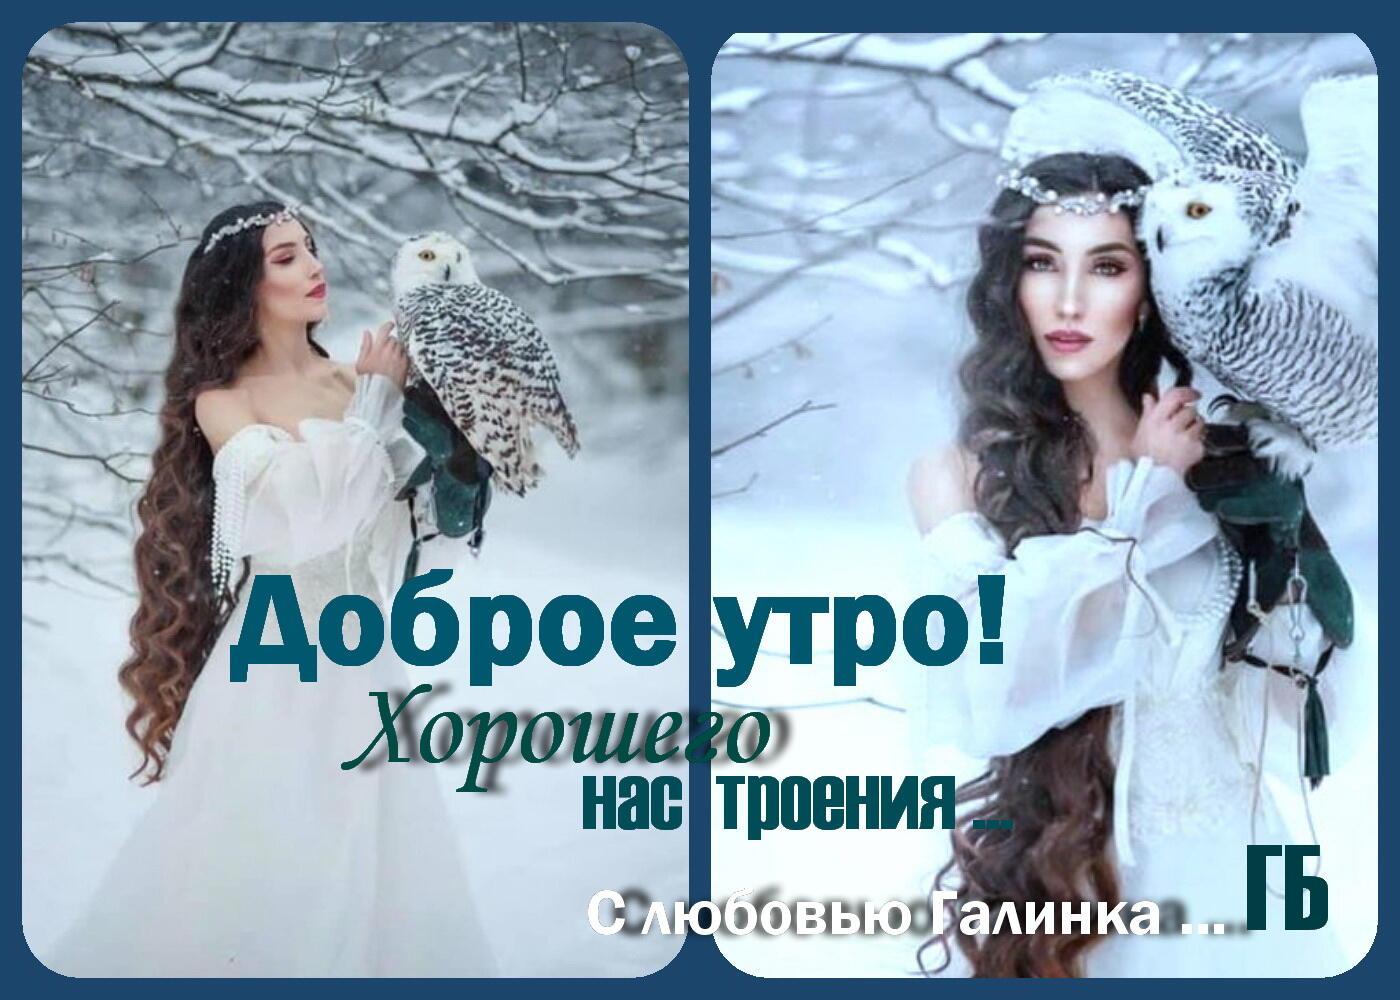 Колдунья белых снов не вечна - Галинка Багрецова